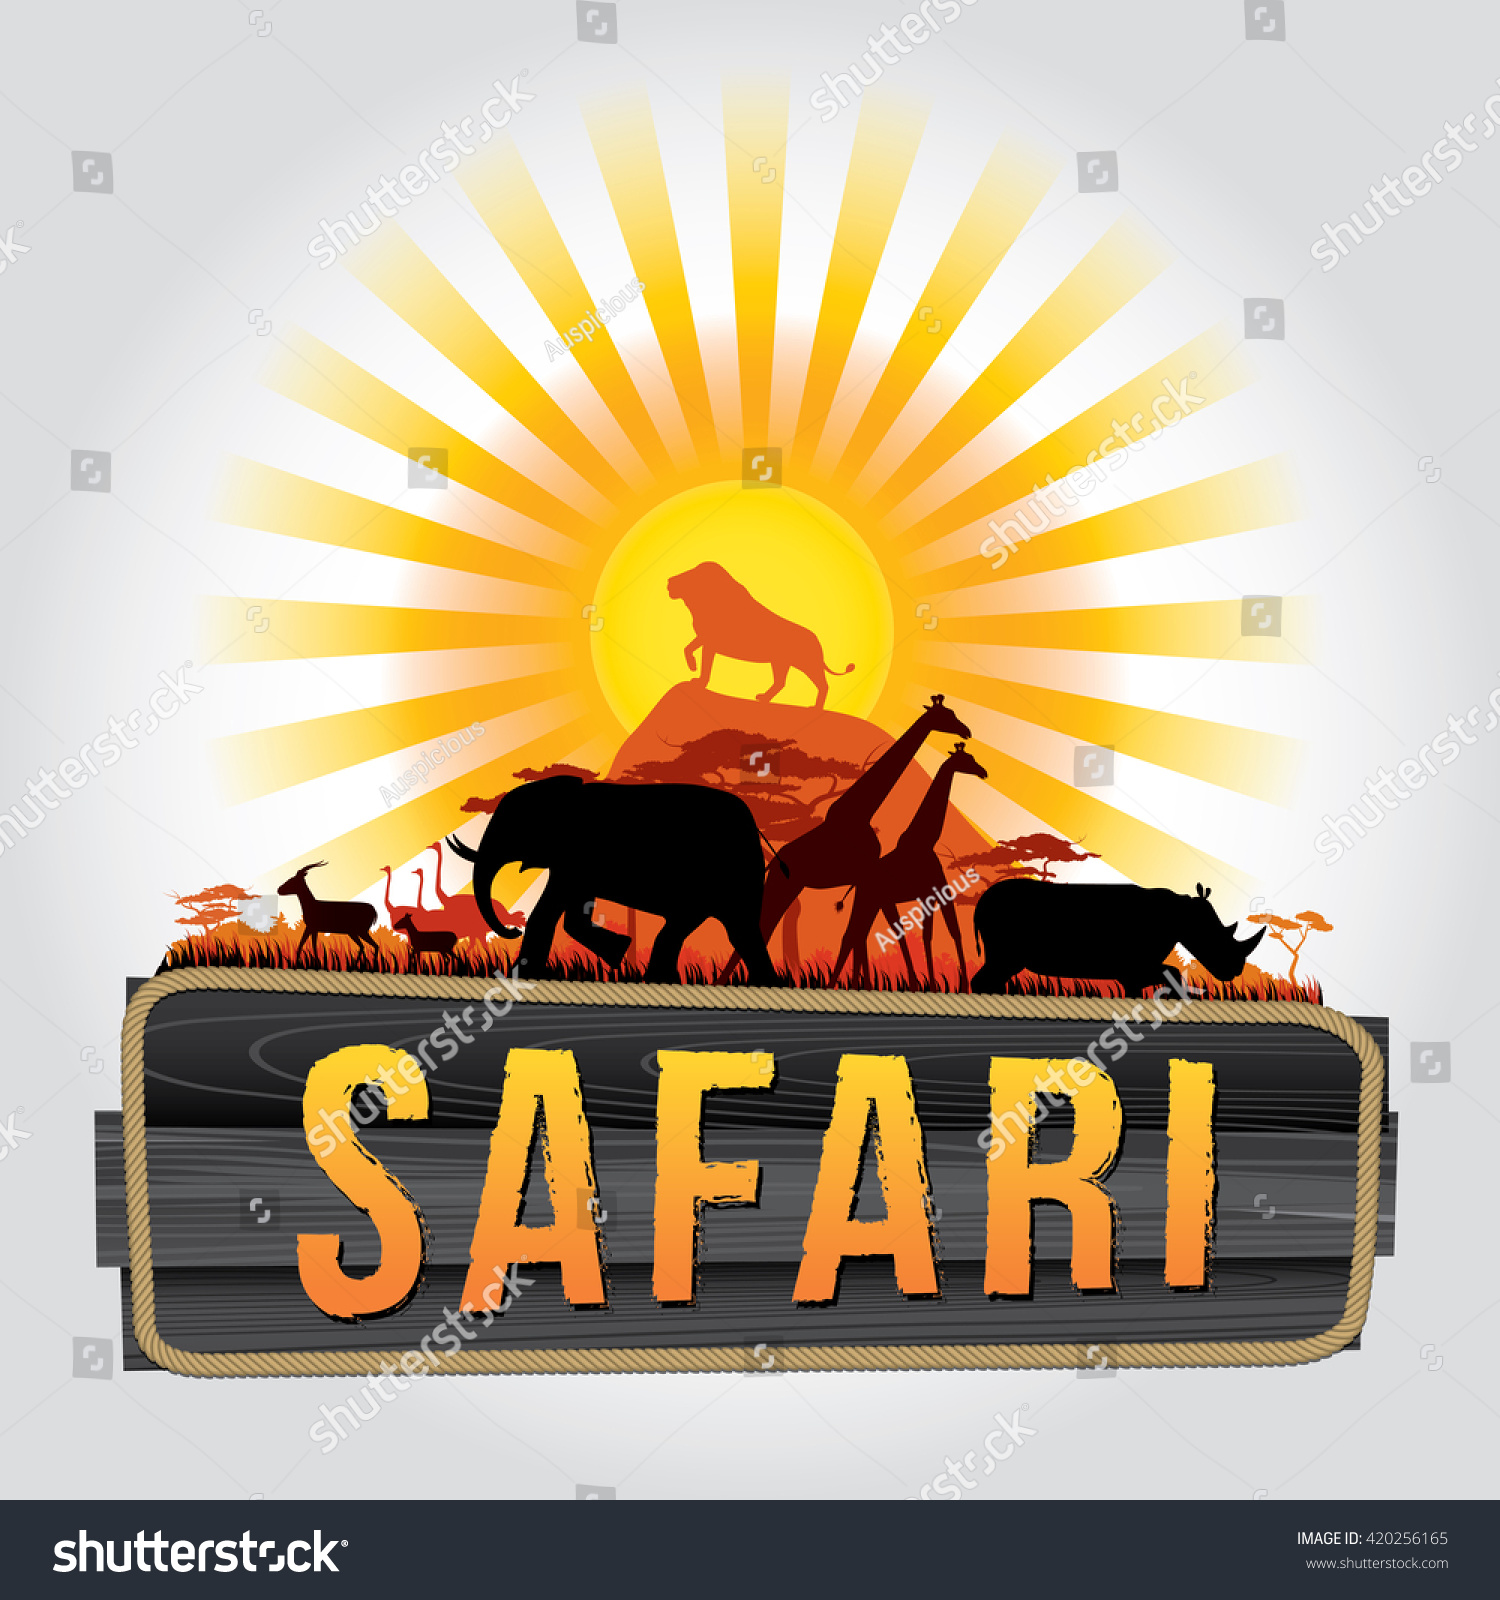 safari theme image